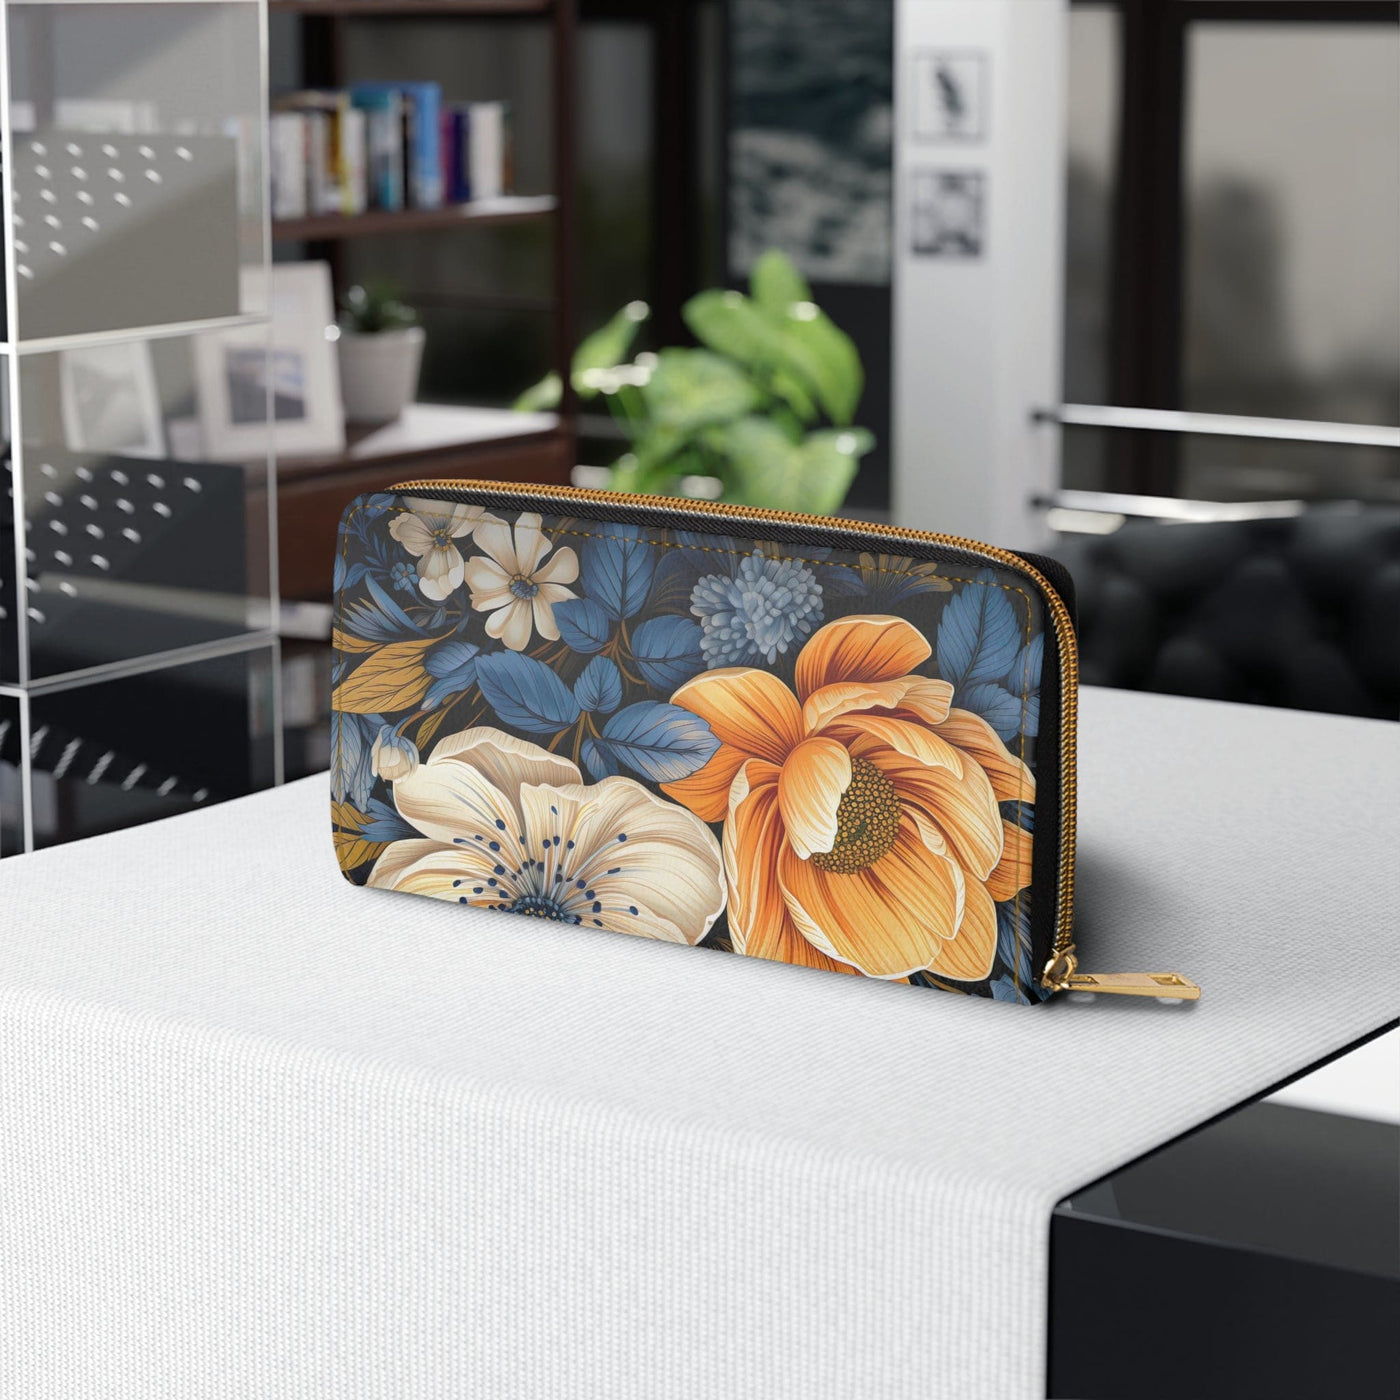 Blue Floral Block Print Illustration Womens Zipper Wallet Clutch Purse - Bags